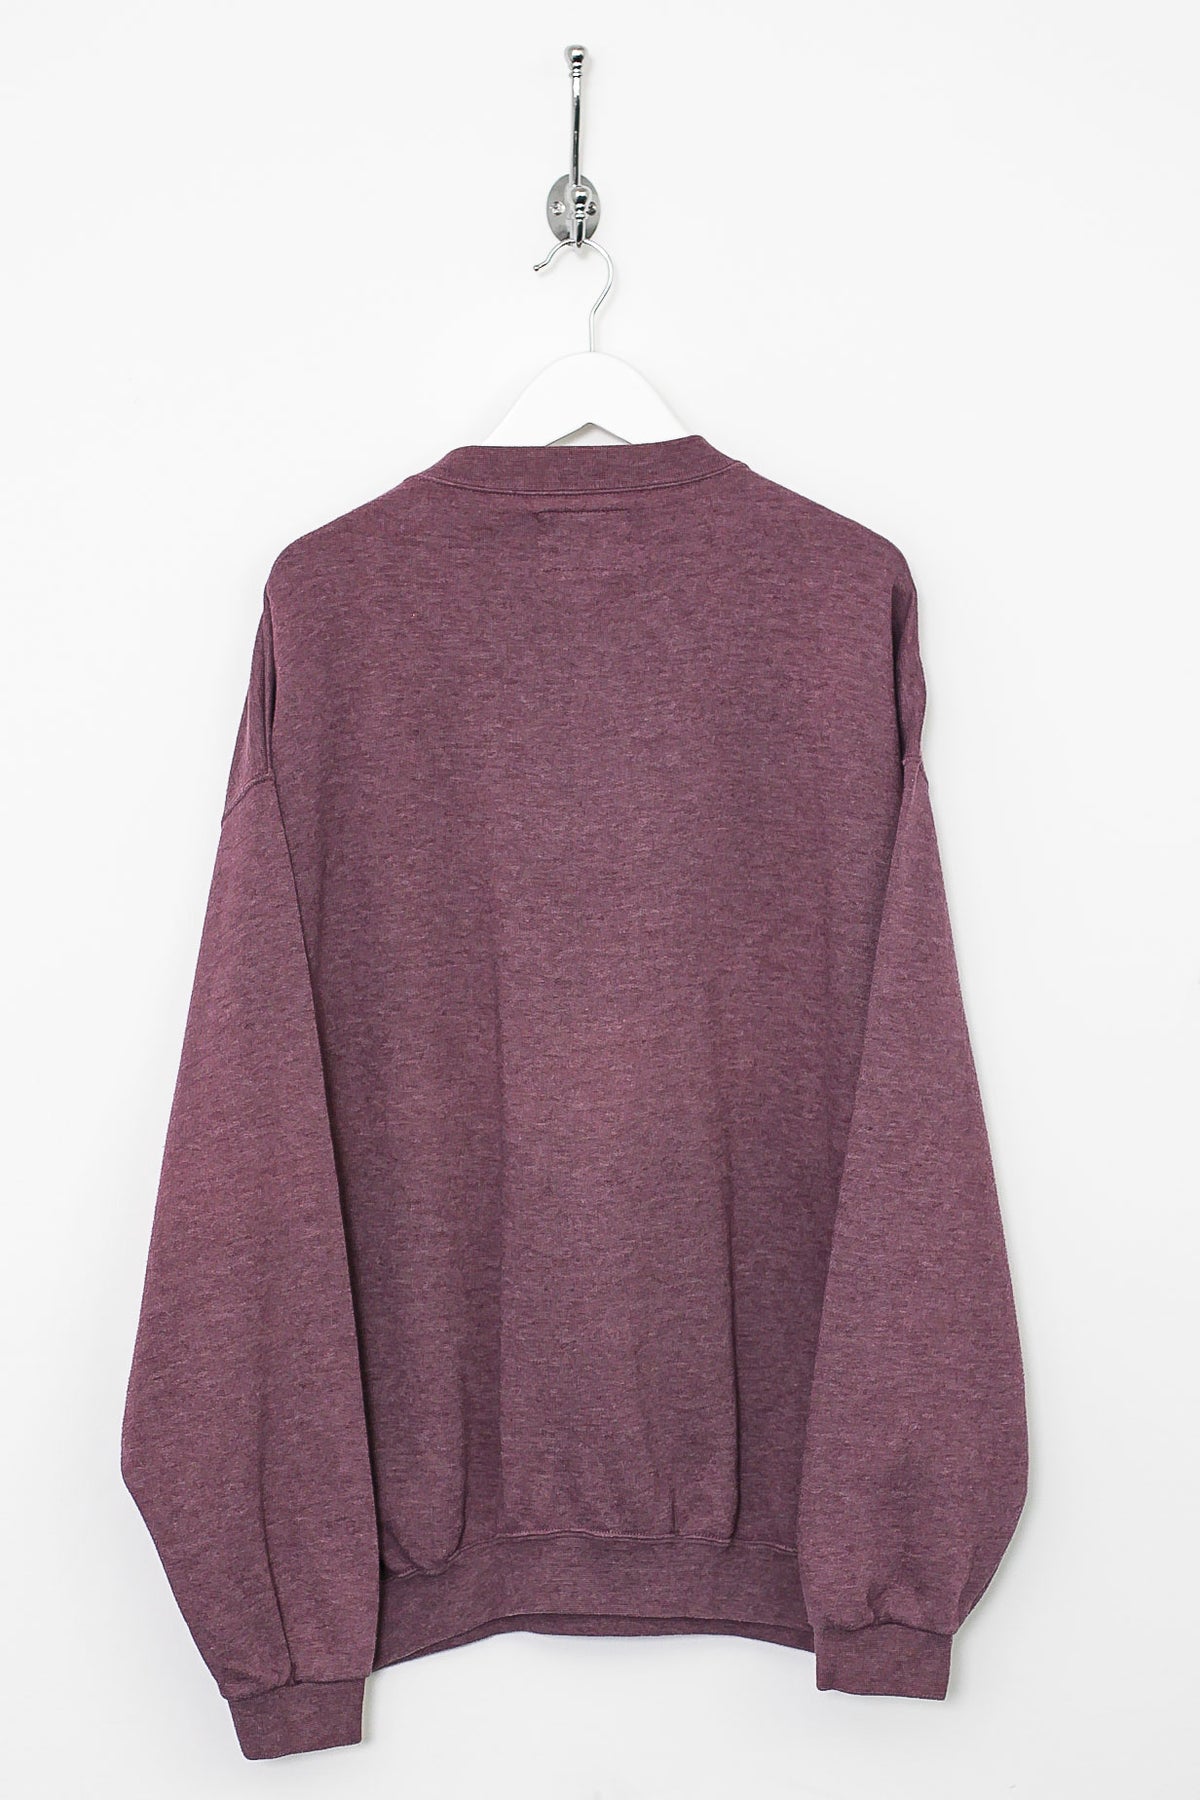 00s Levi's Sweatshirt (XL)